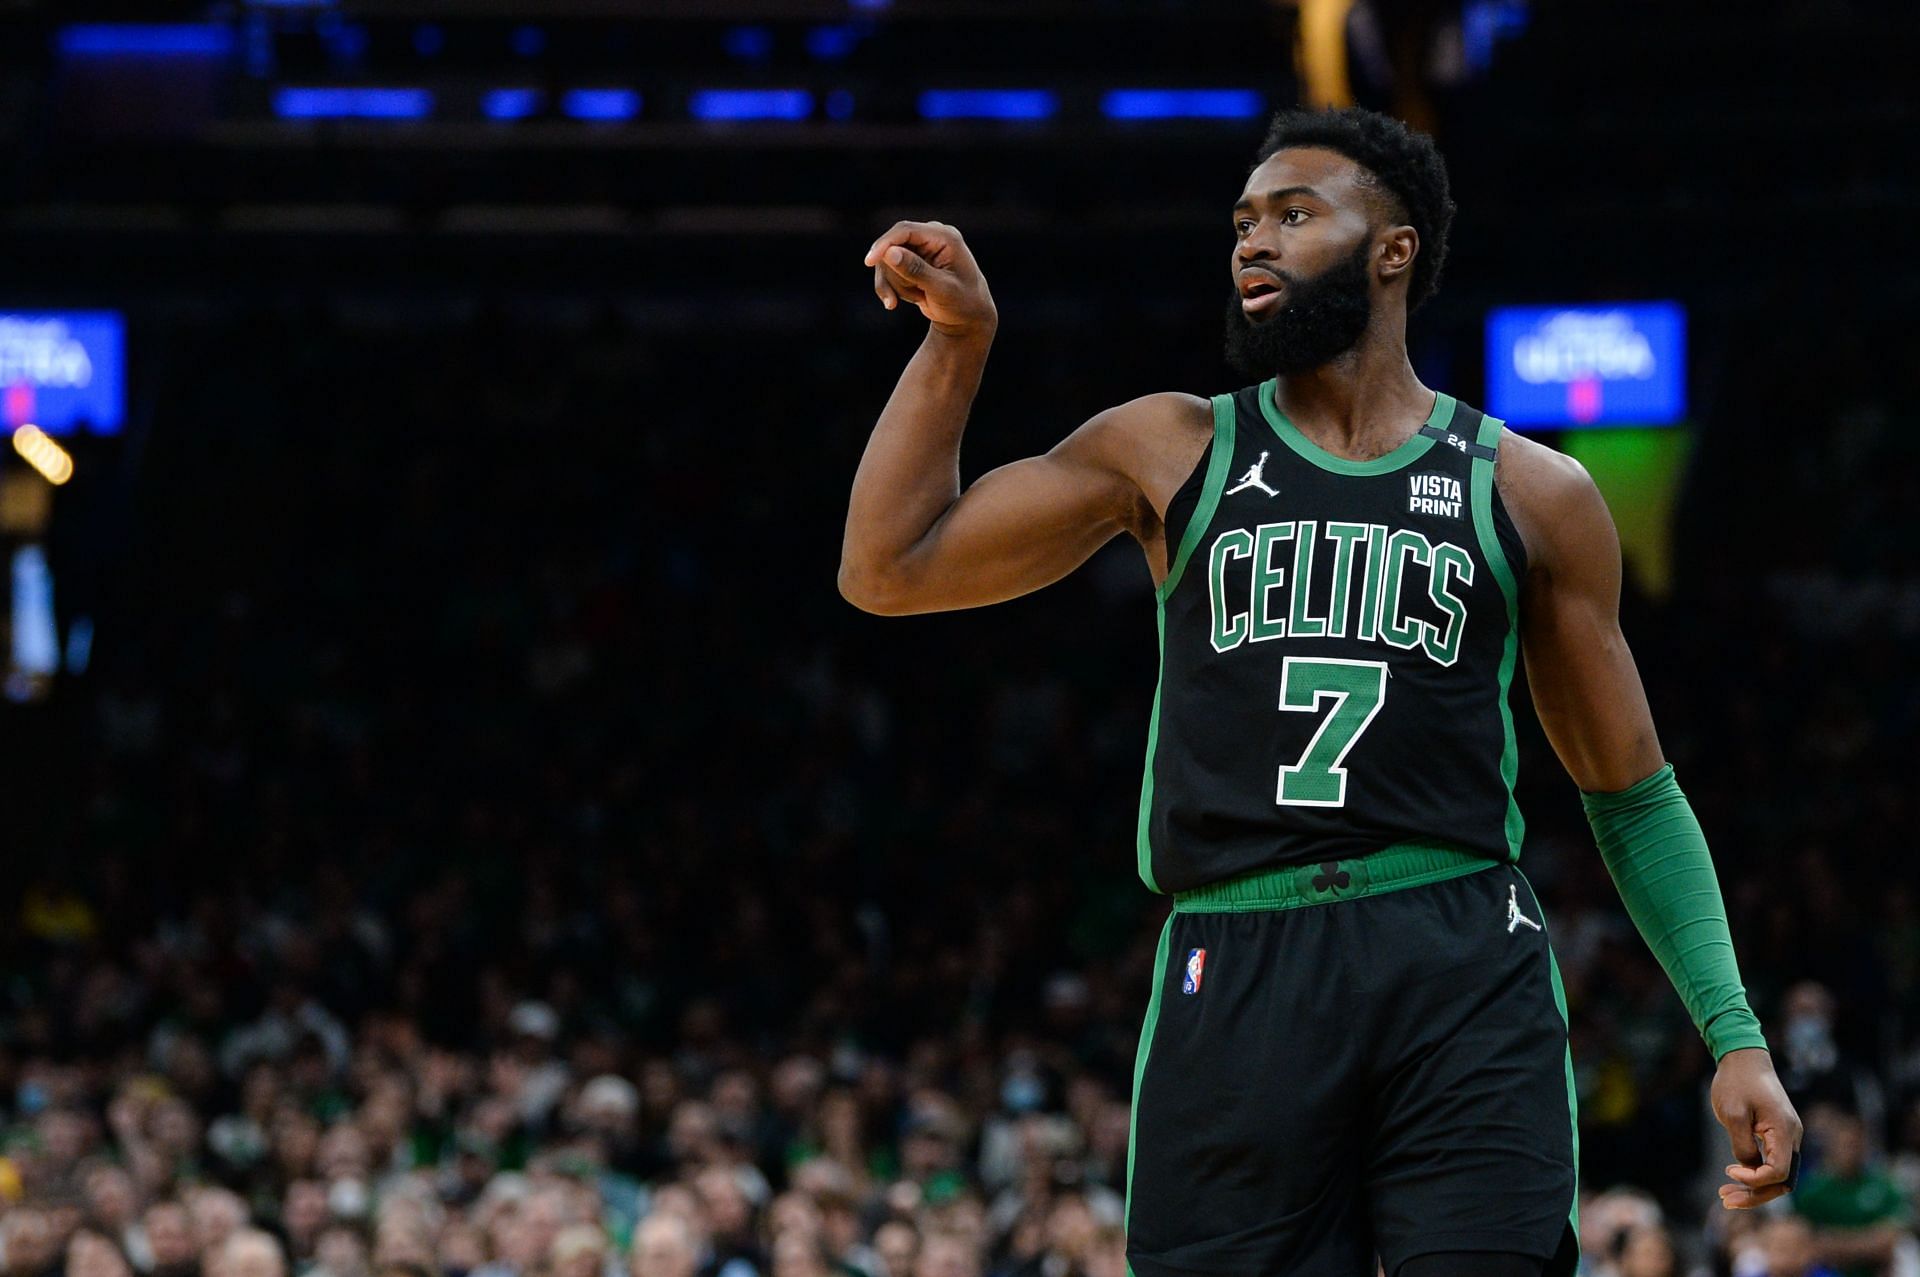 The Celtics are on a three-game winning streak